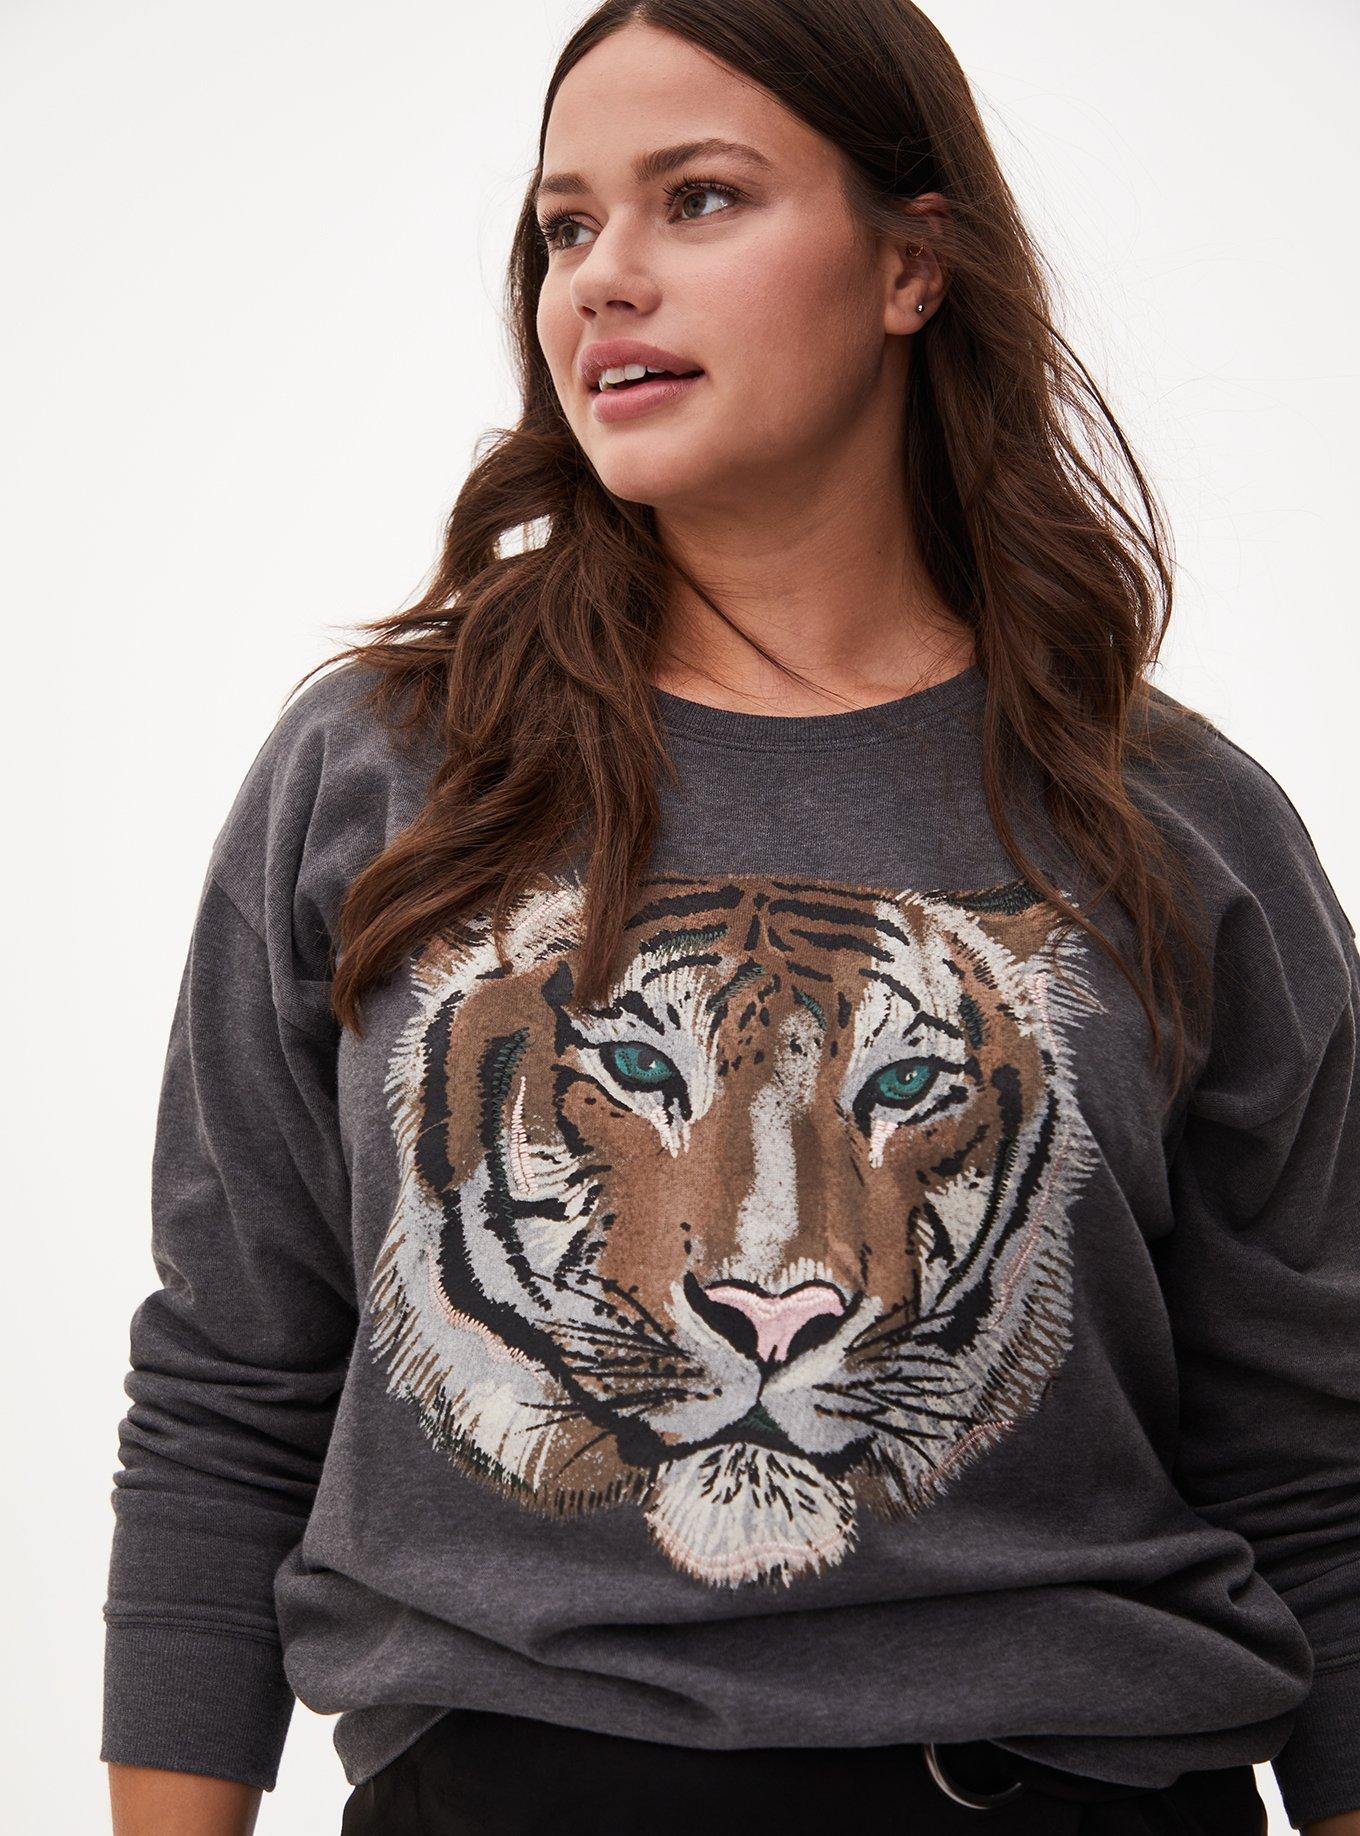 Tiger Sweatshirt - Grey